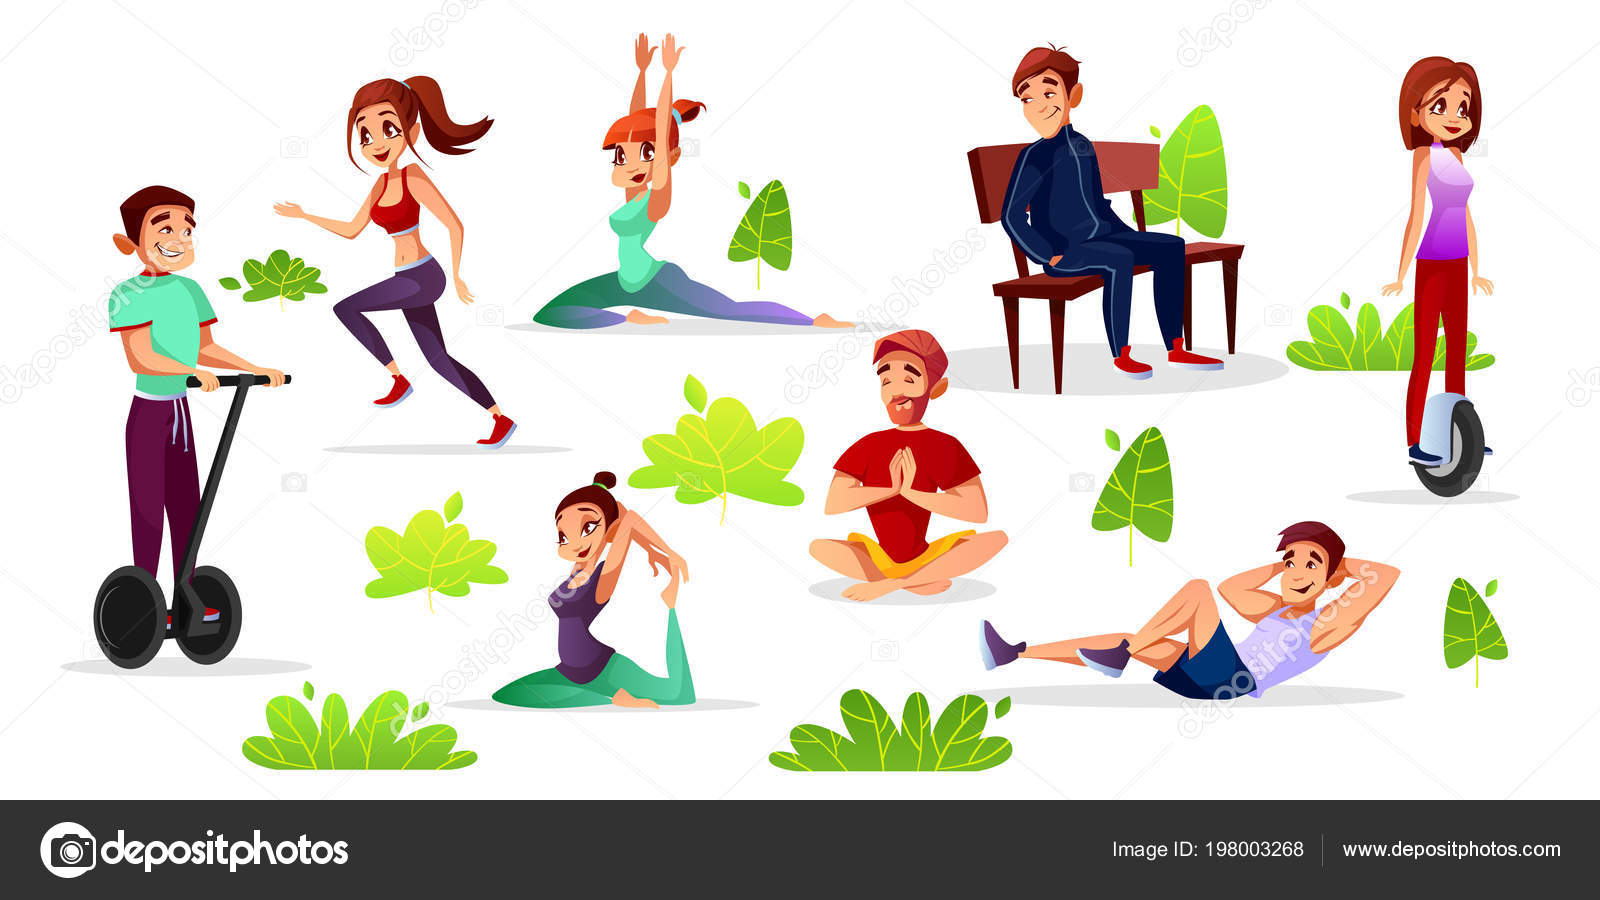 cartoon people stretching